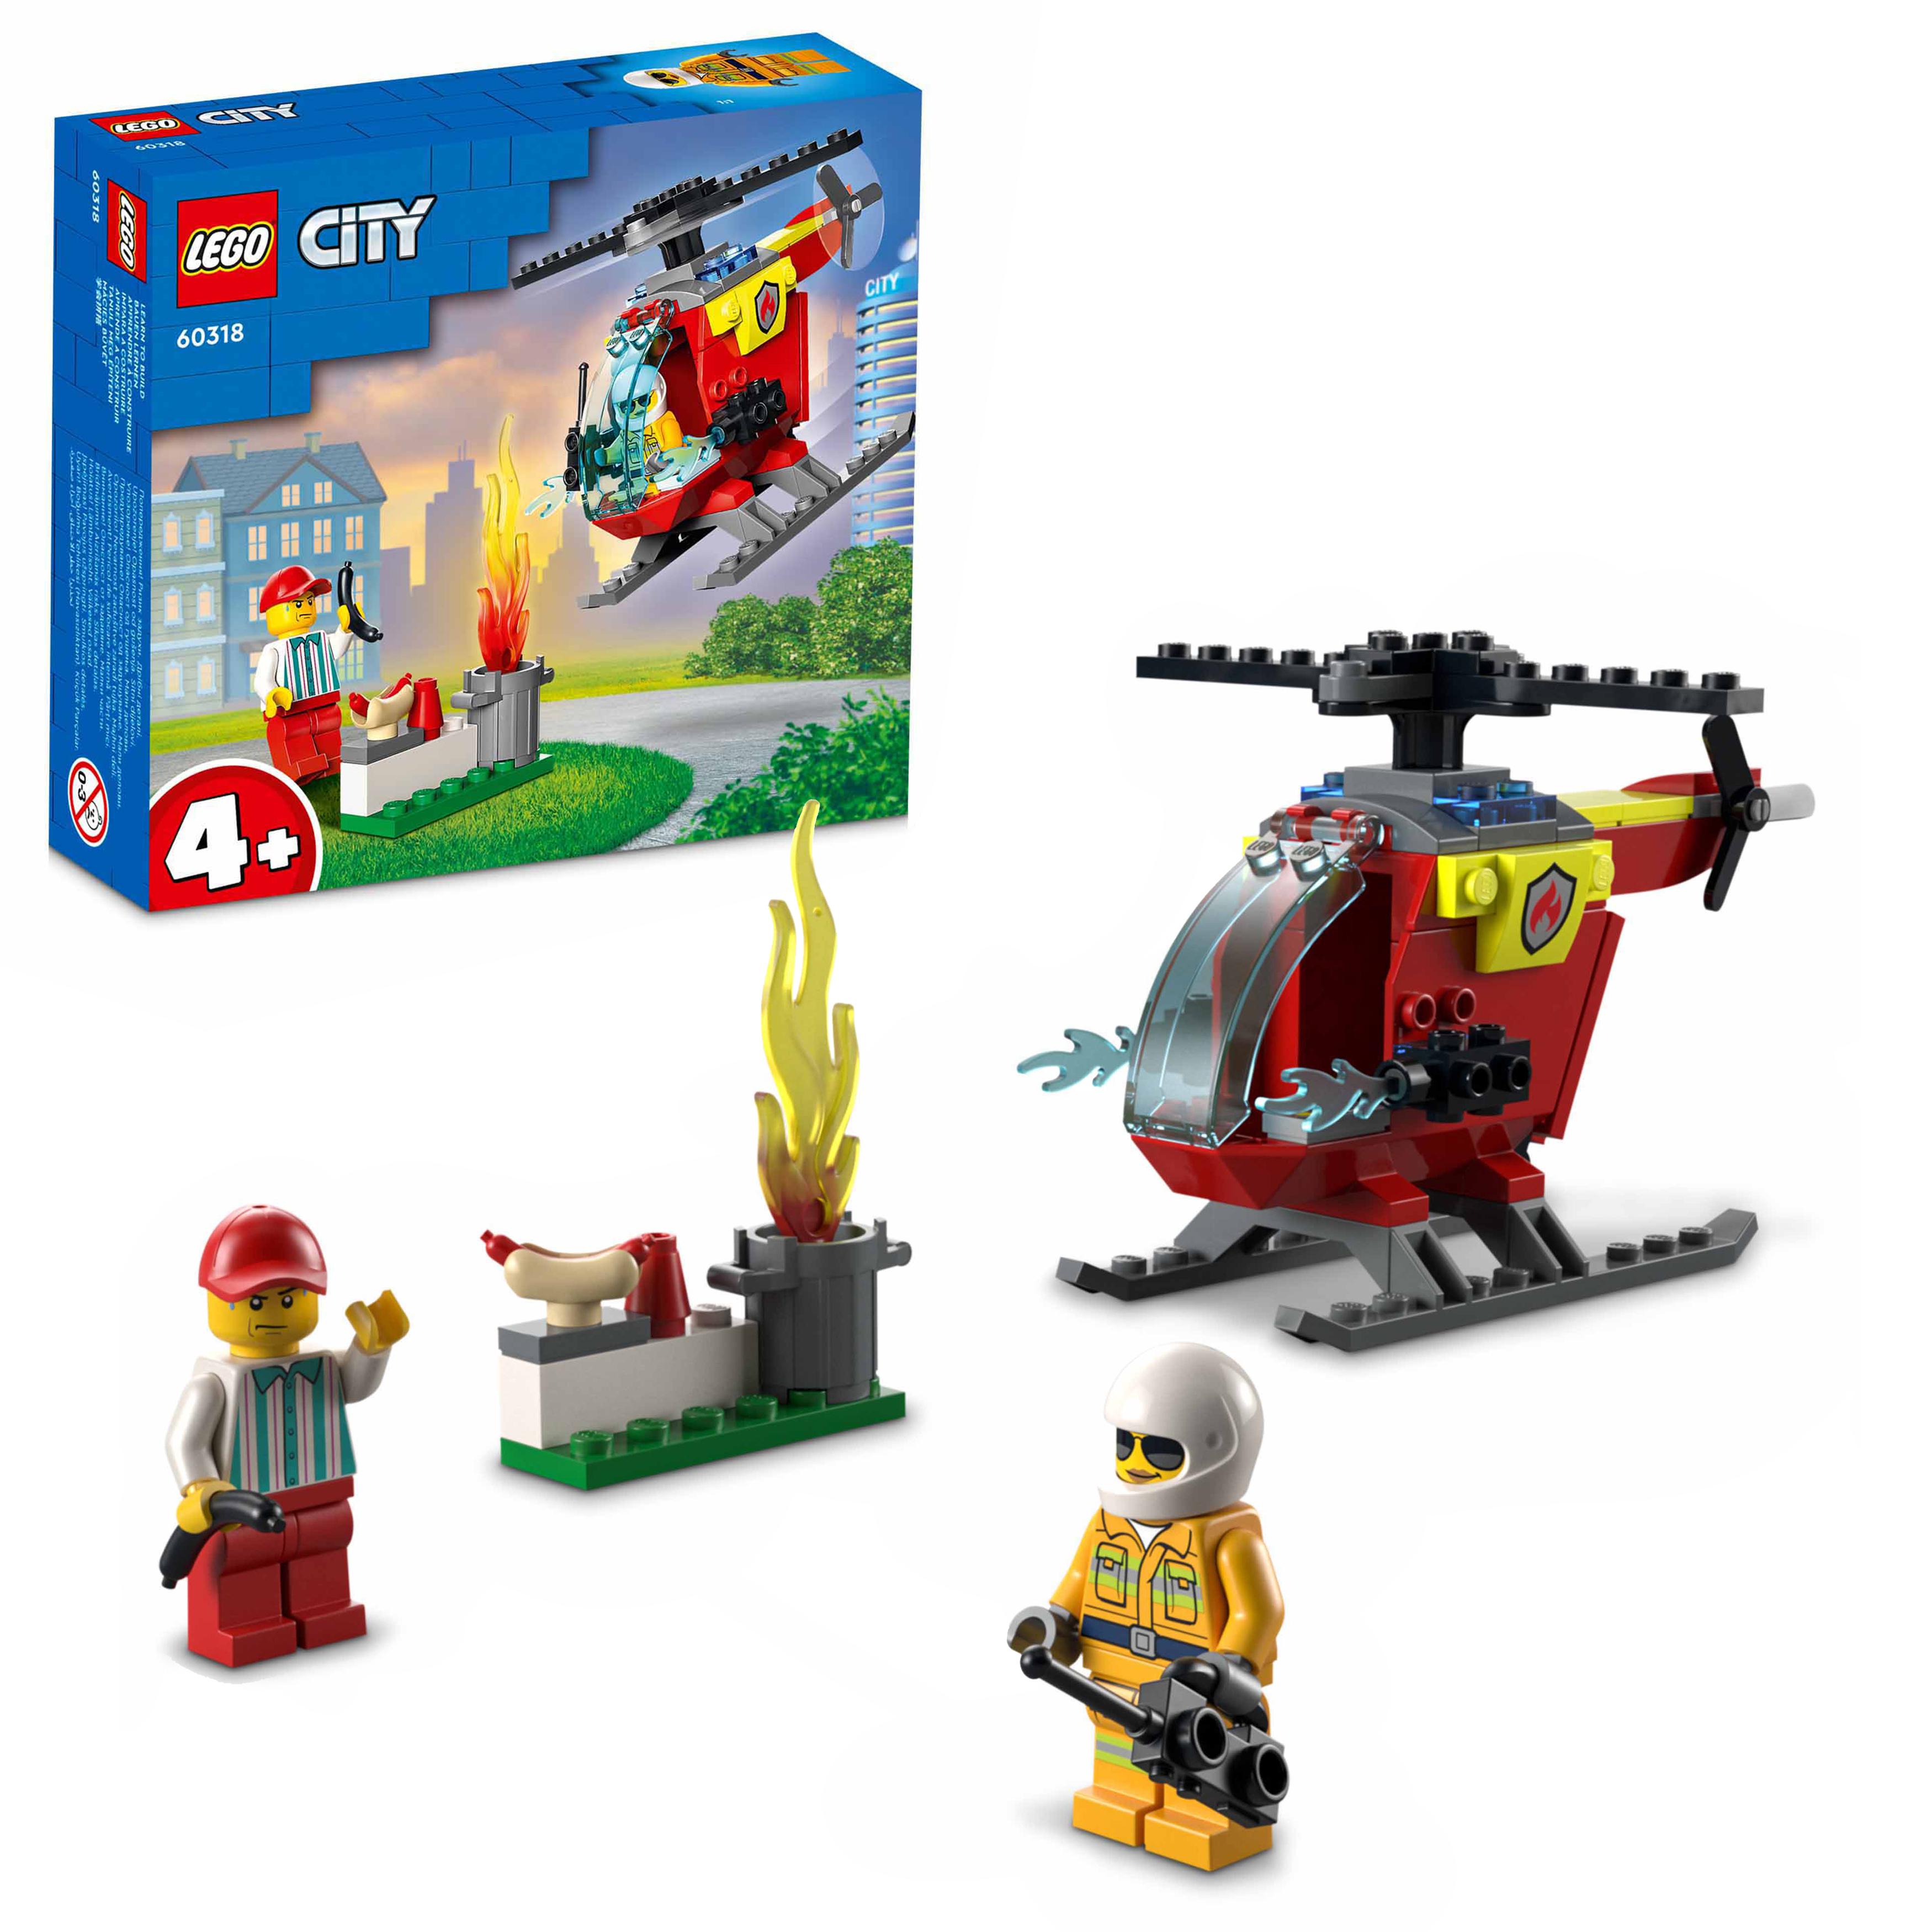 LEGO City Fire Elicottero Antincendio, con 2 Minifigure e Base Starter Brick, Gi 60318, , large